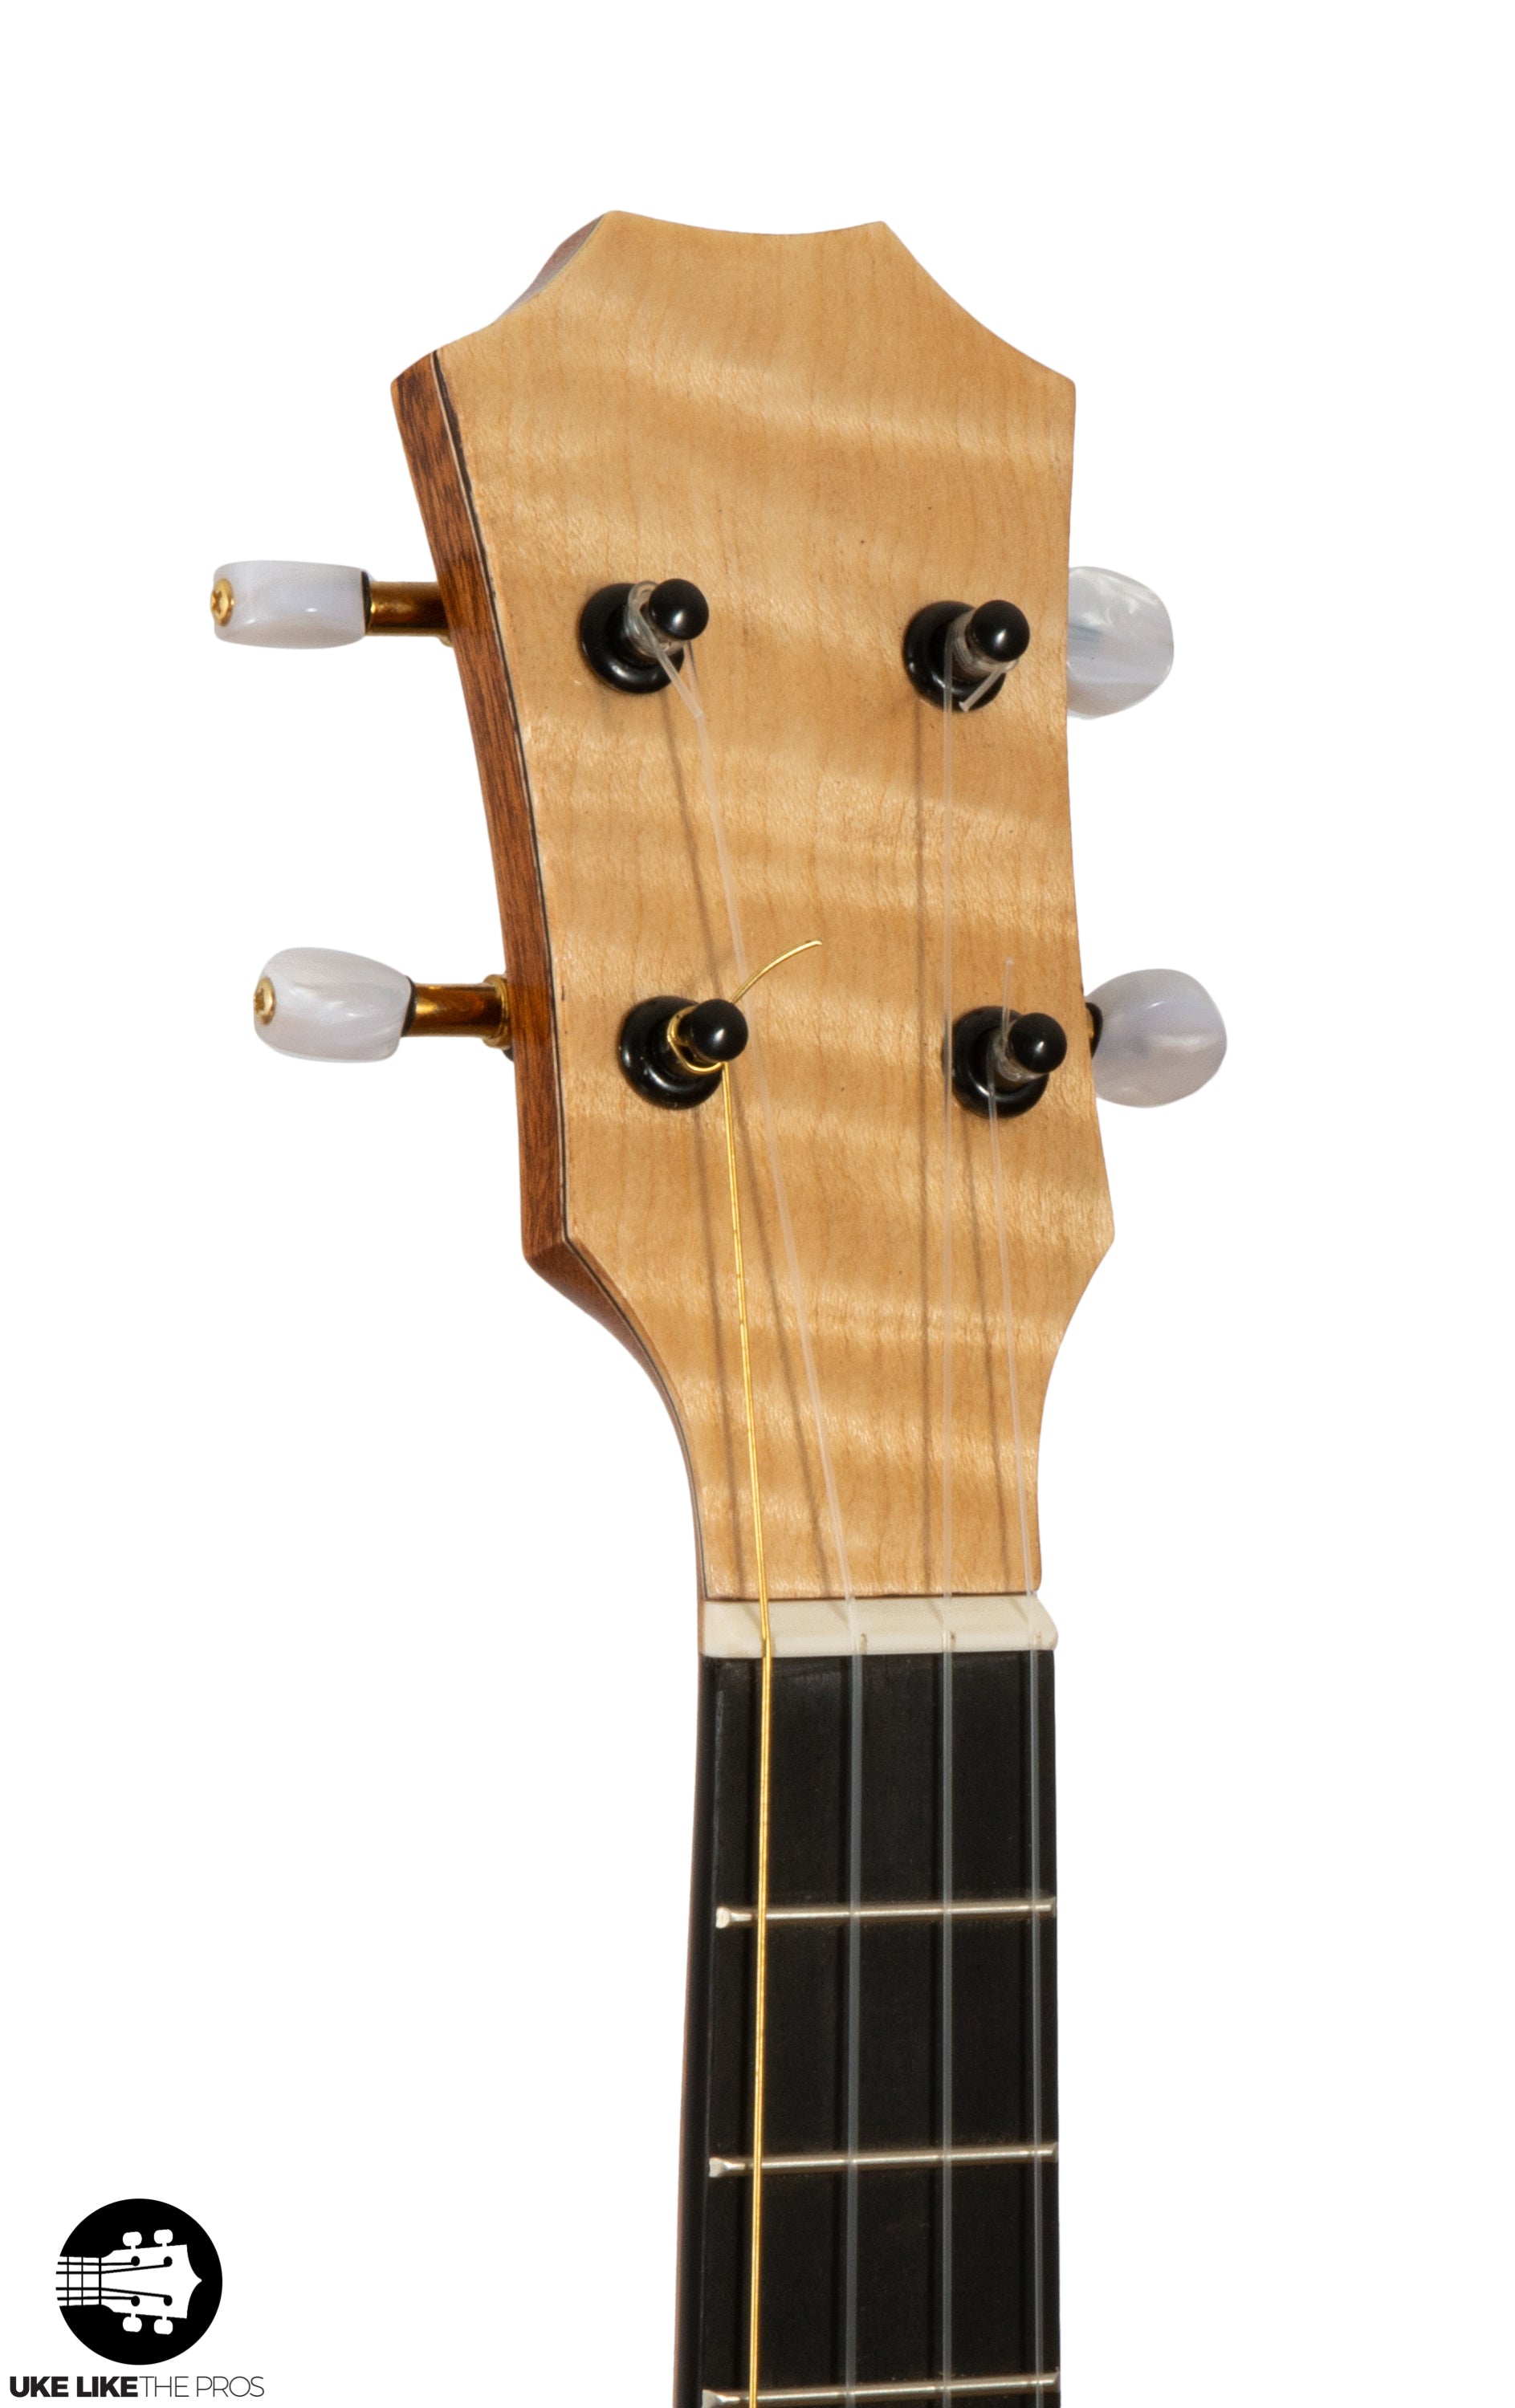 Guitarras Romero Model-T Custom Tenor Ukulele PROTOTYPE #1